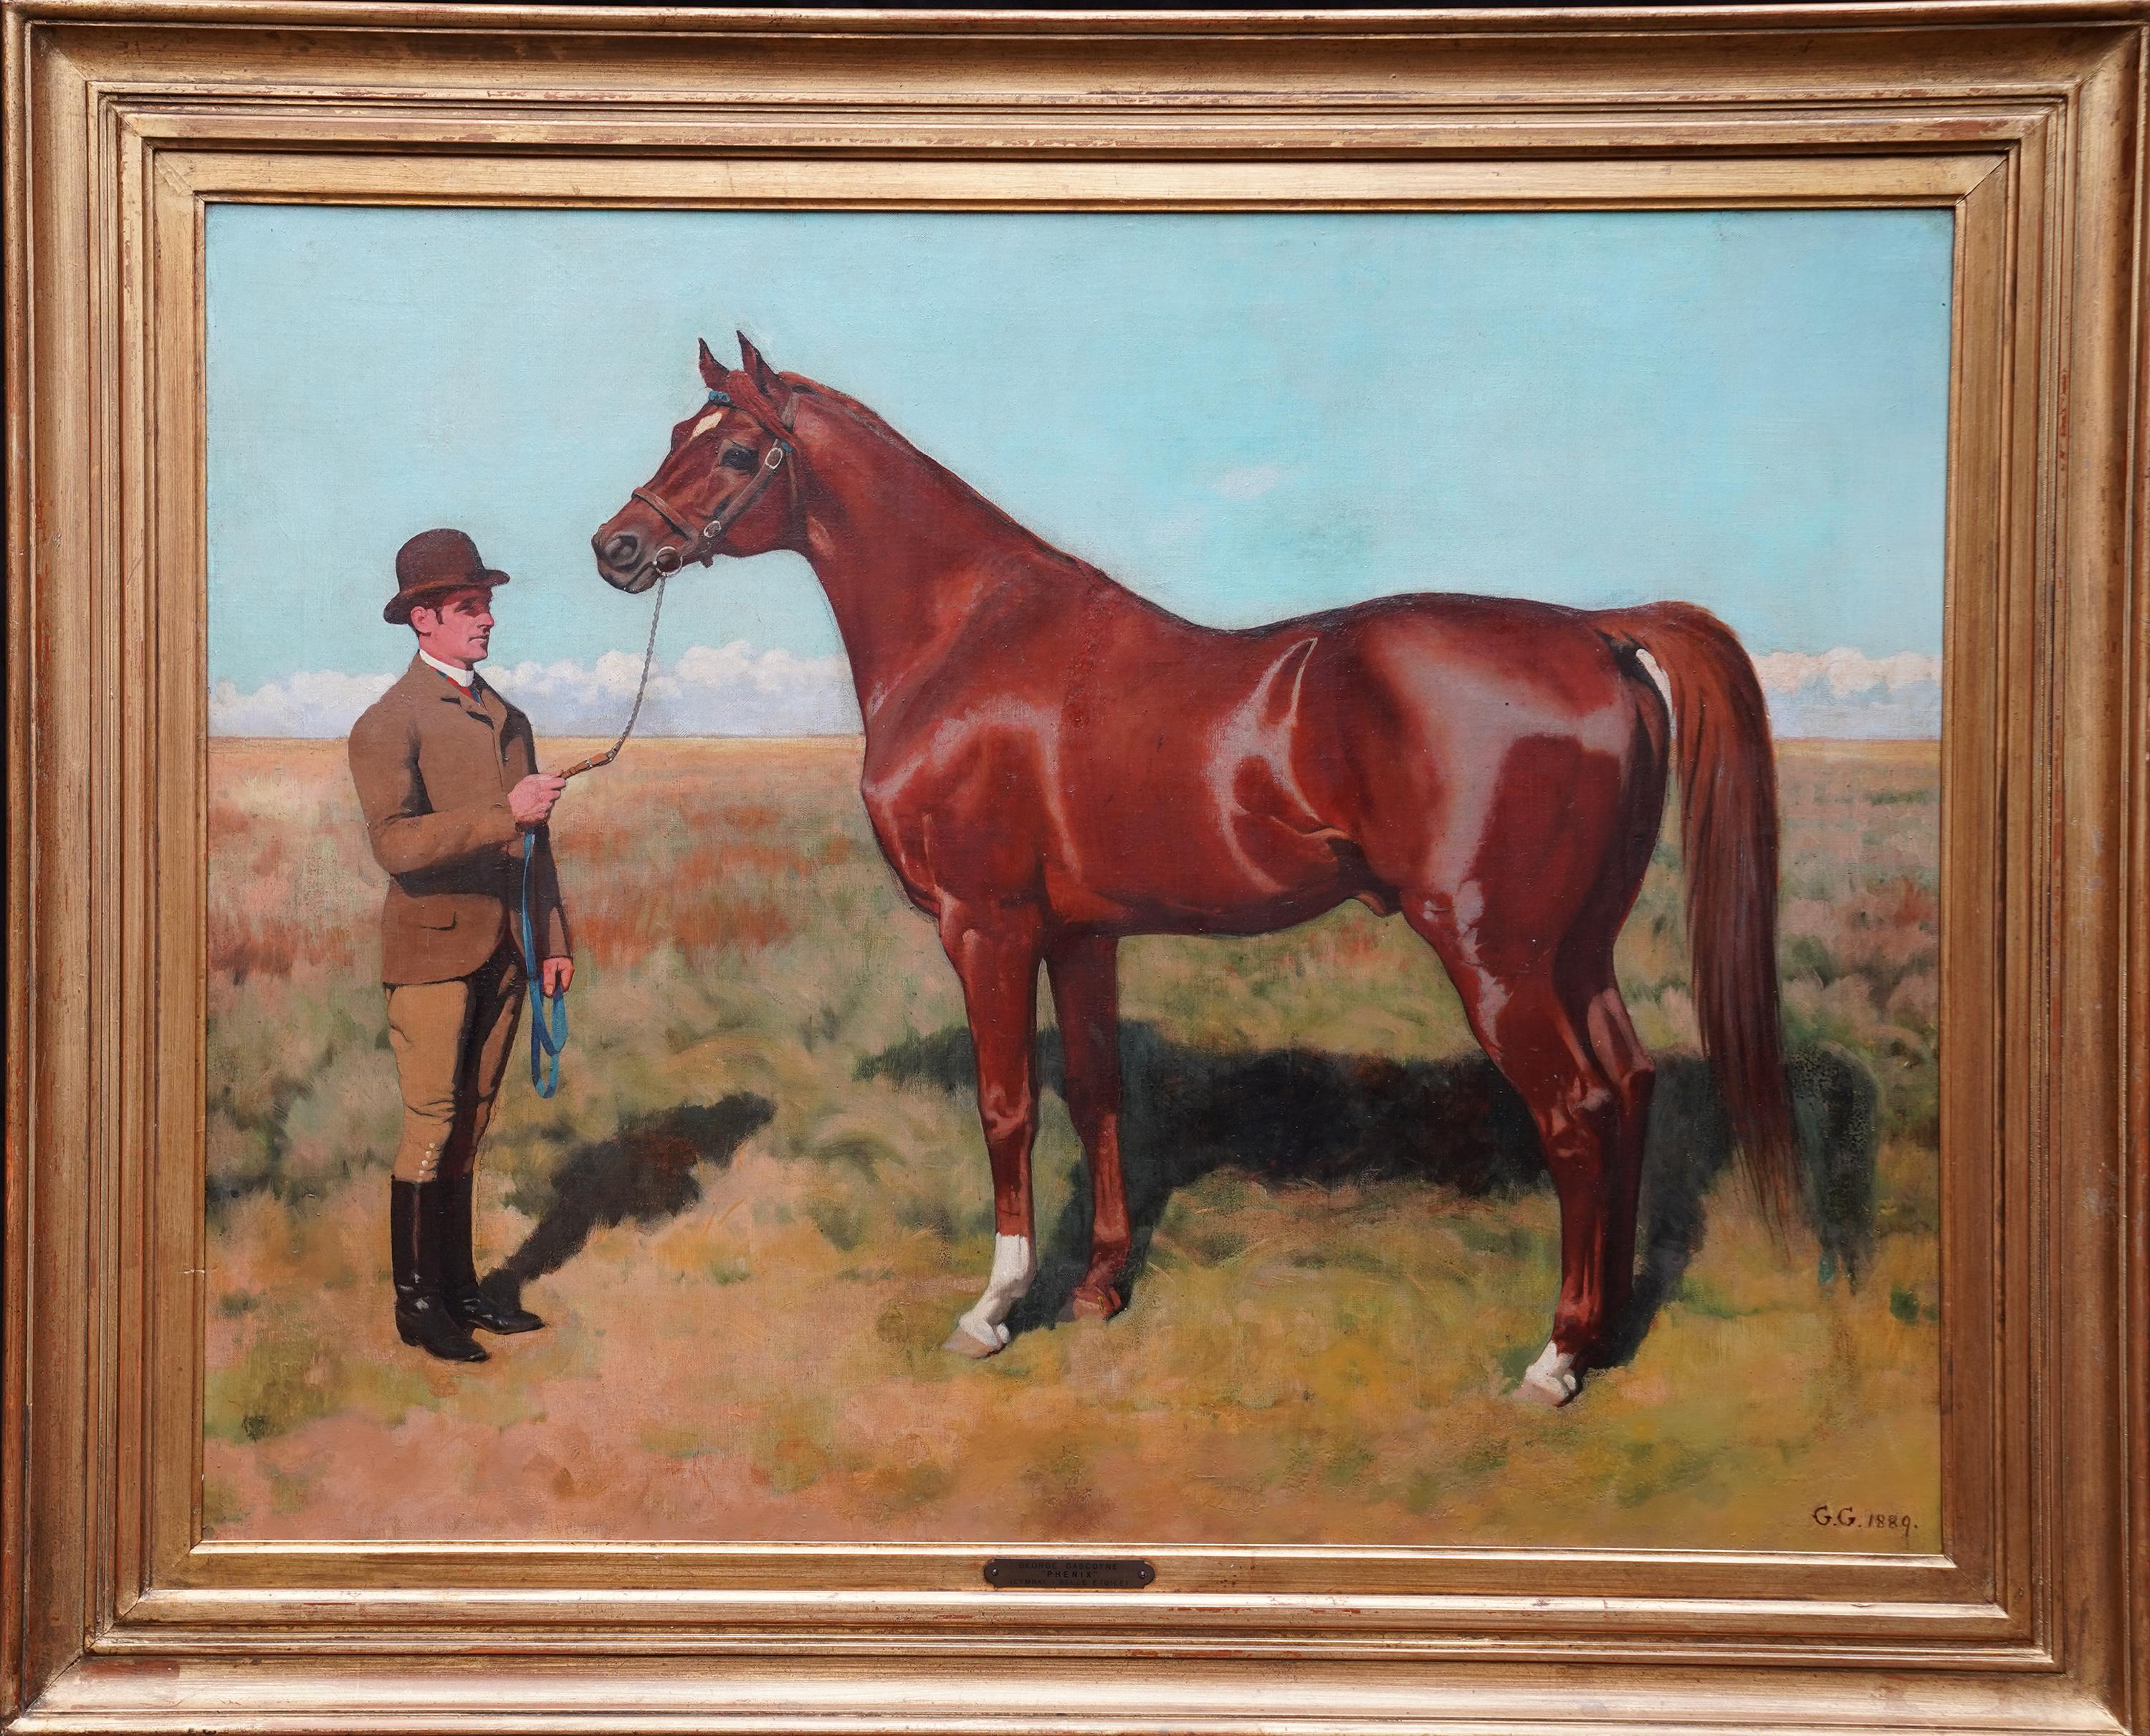 George Gascoyne Portrait Painting - Race Horse Phoenix with Guilermo Kemmis - British 19th century art oil painting